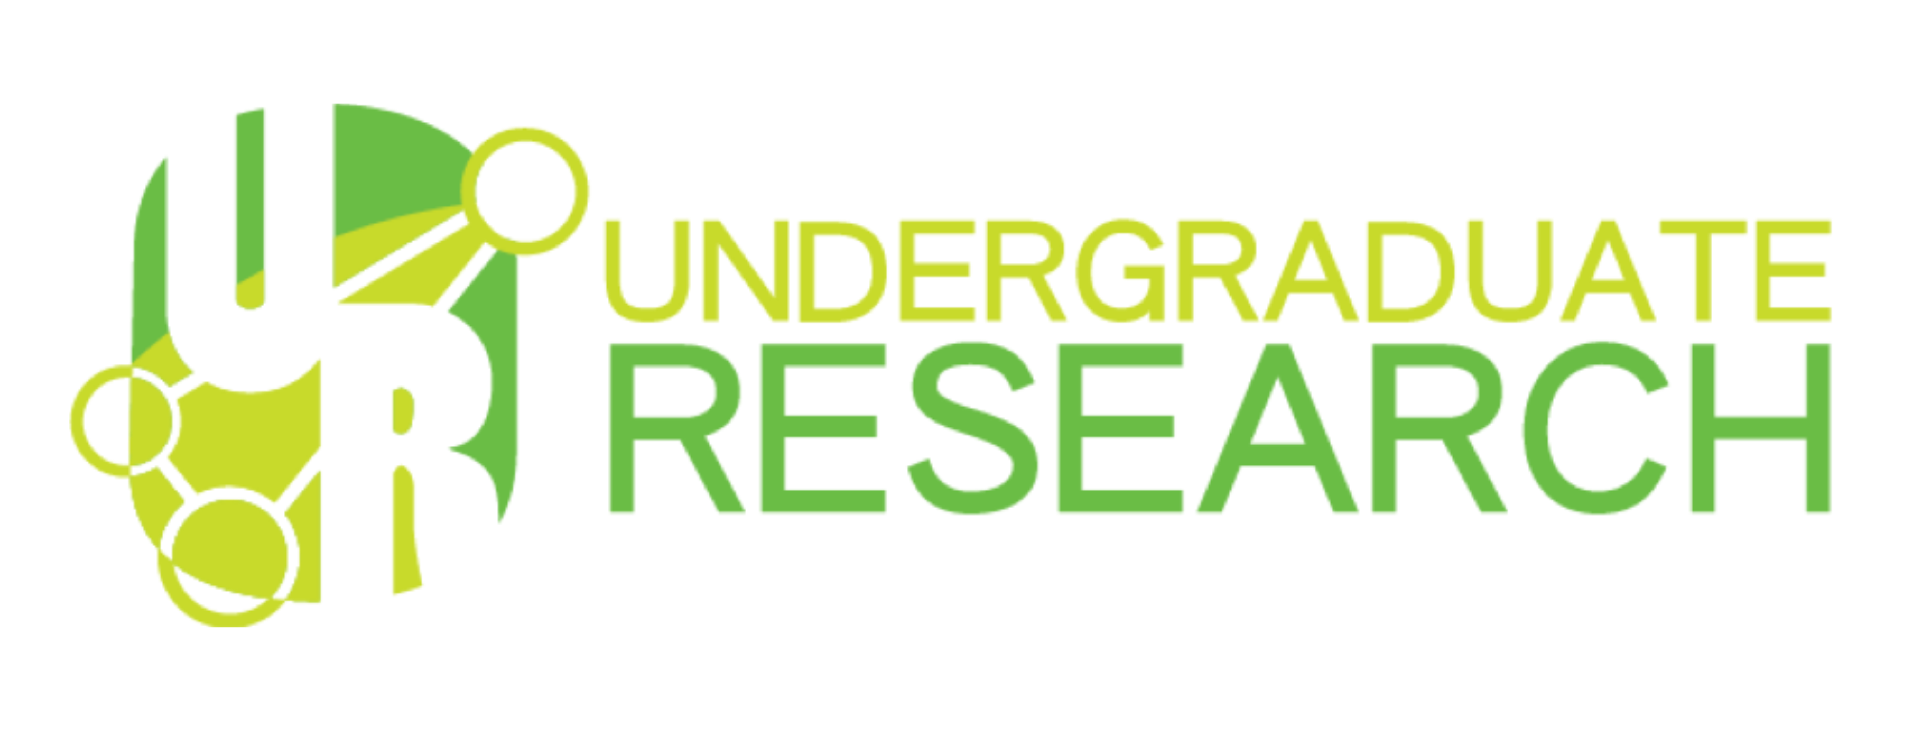 Undergraduate Research logo